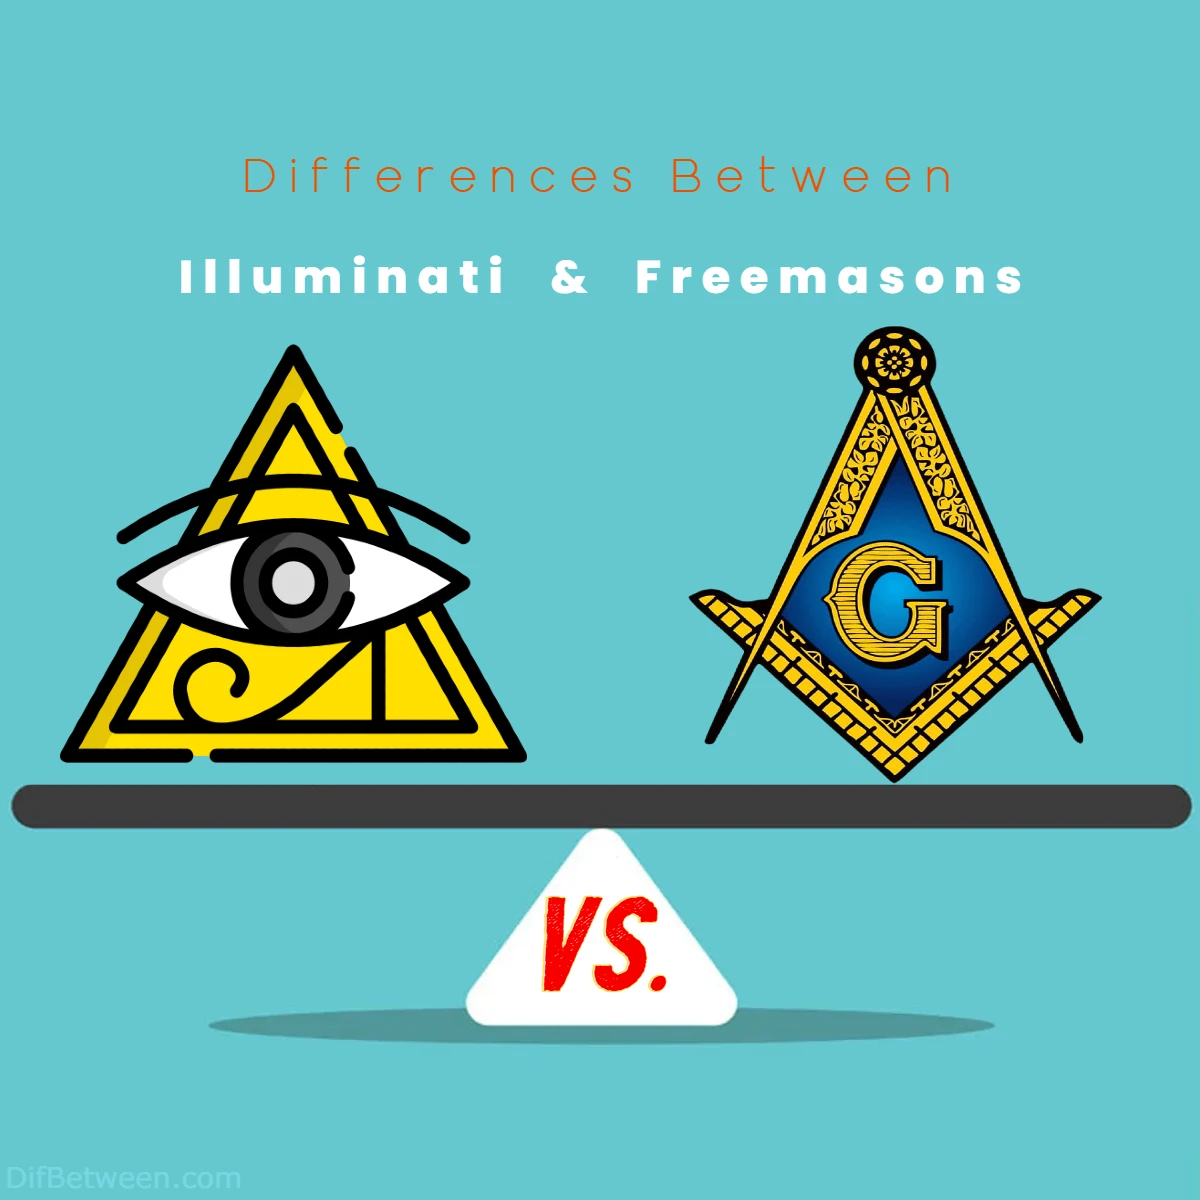 Differences Between Illuminati vs Freemasons